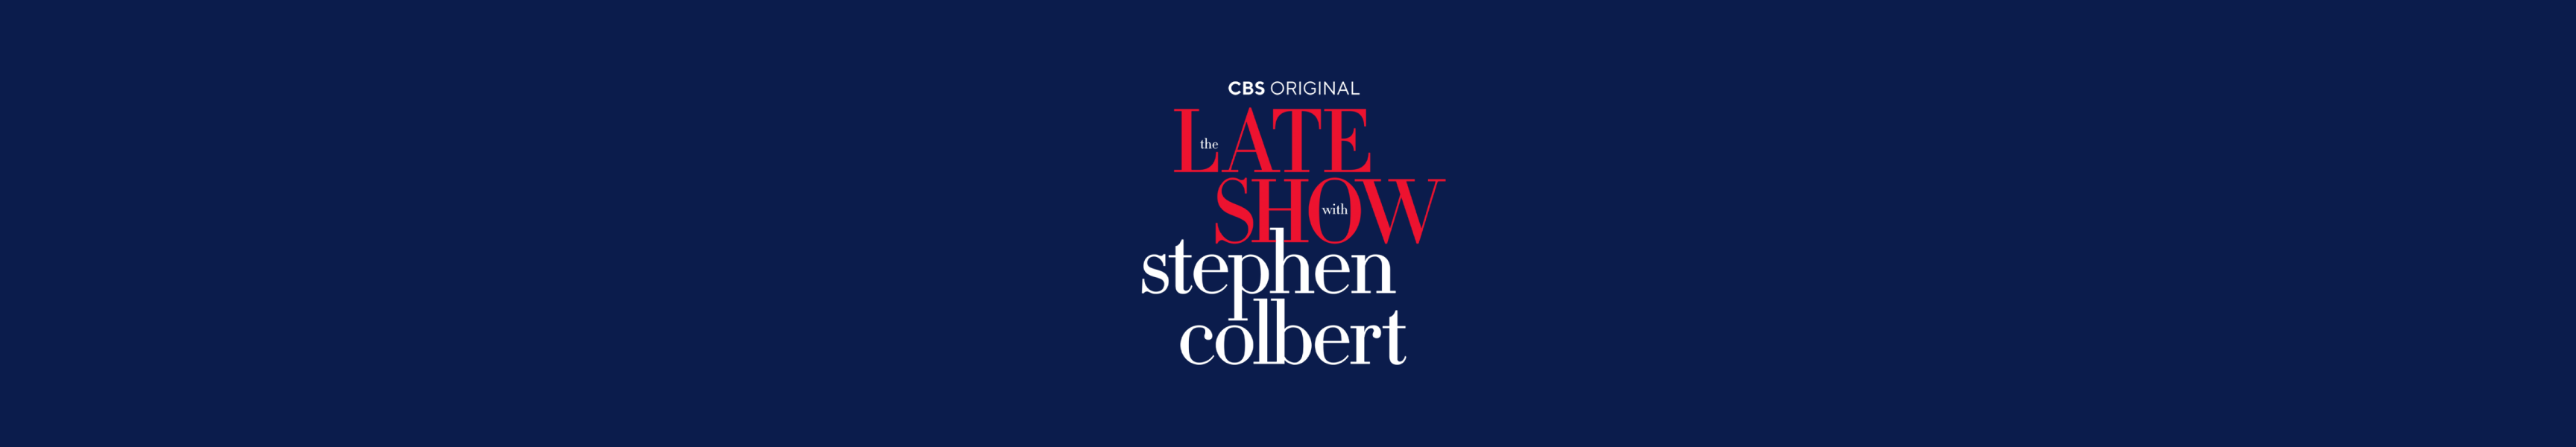 Late Show avec Stephen Colbert